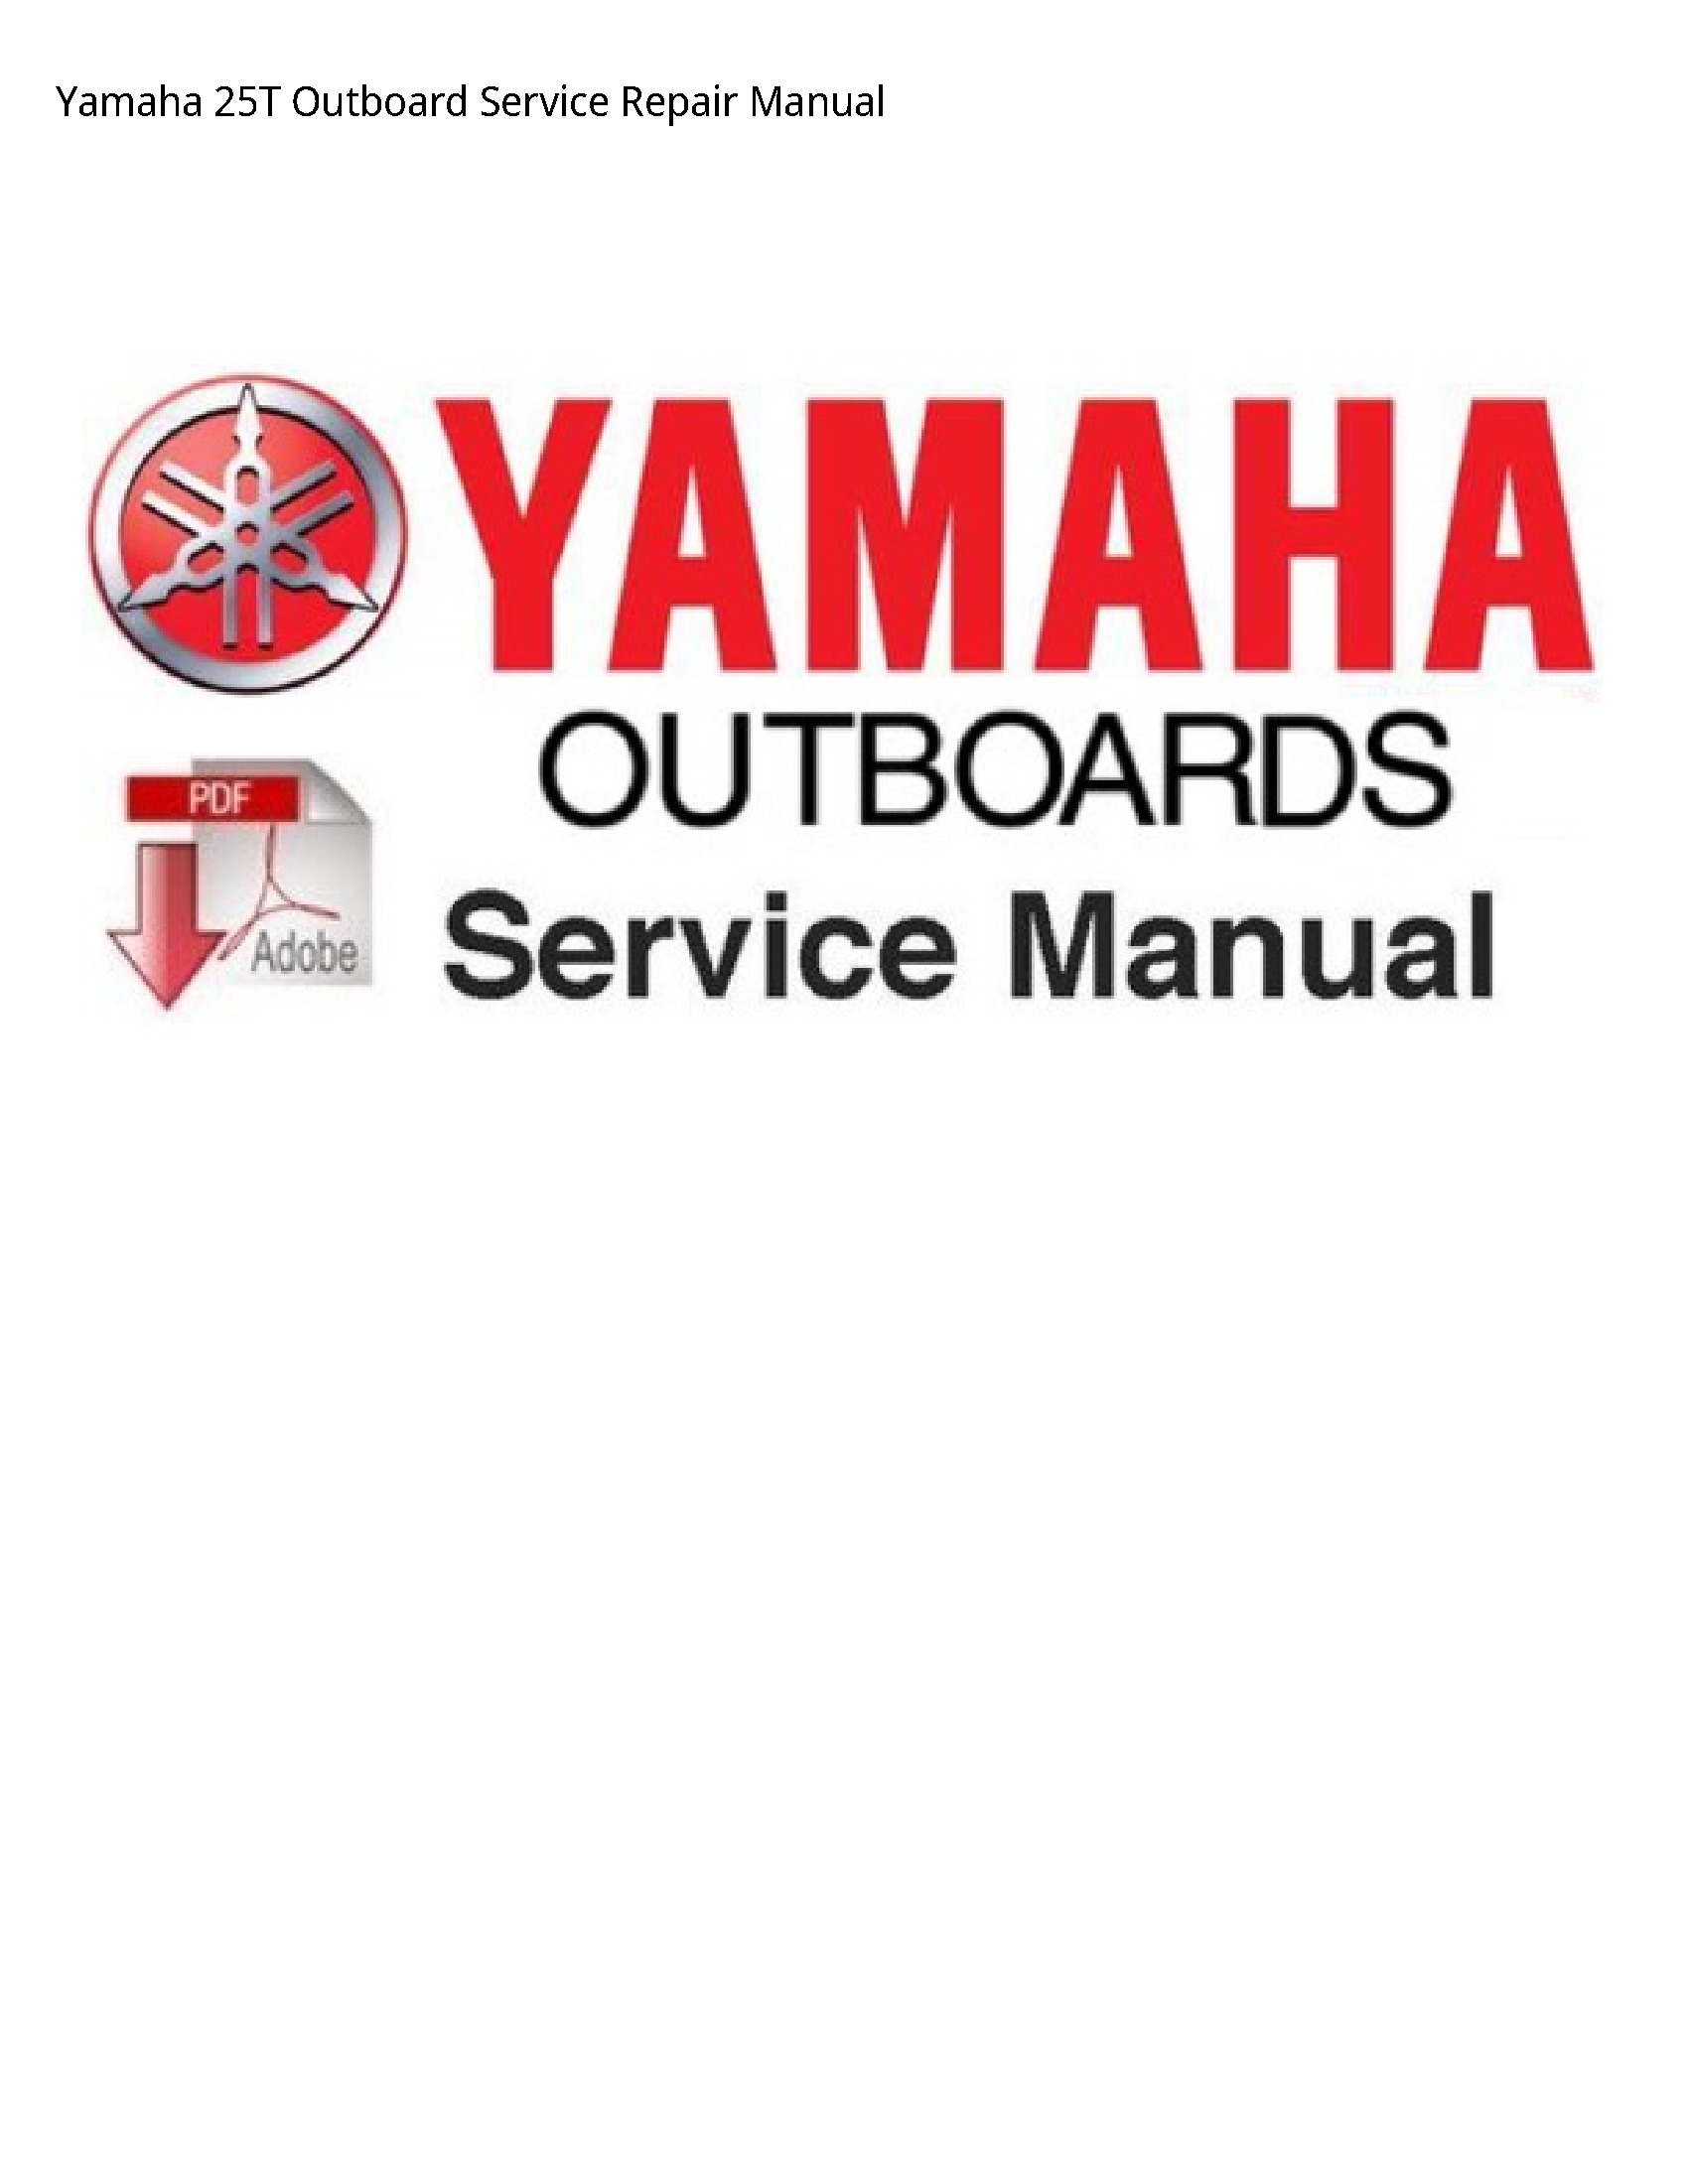 Yamaha 25T Outboard manual